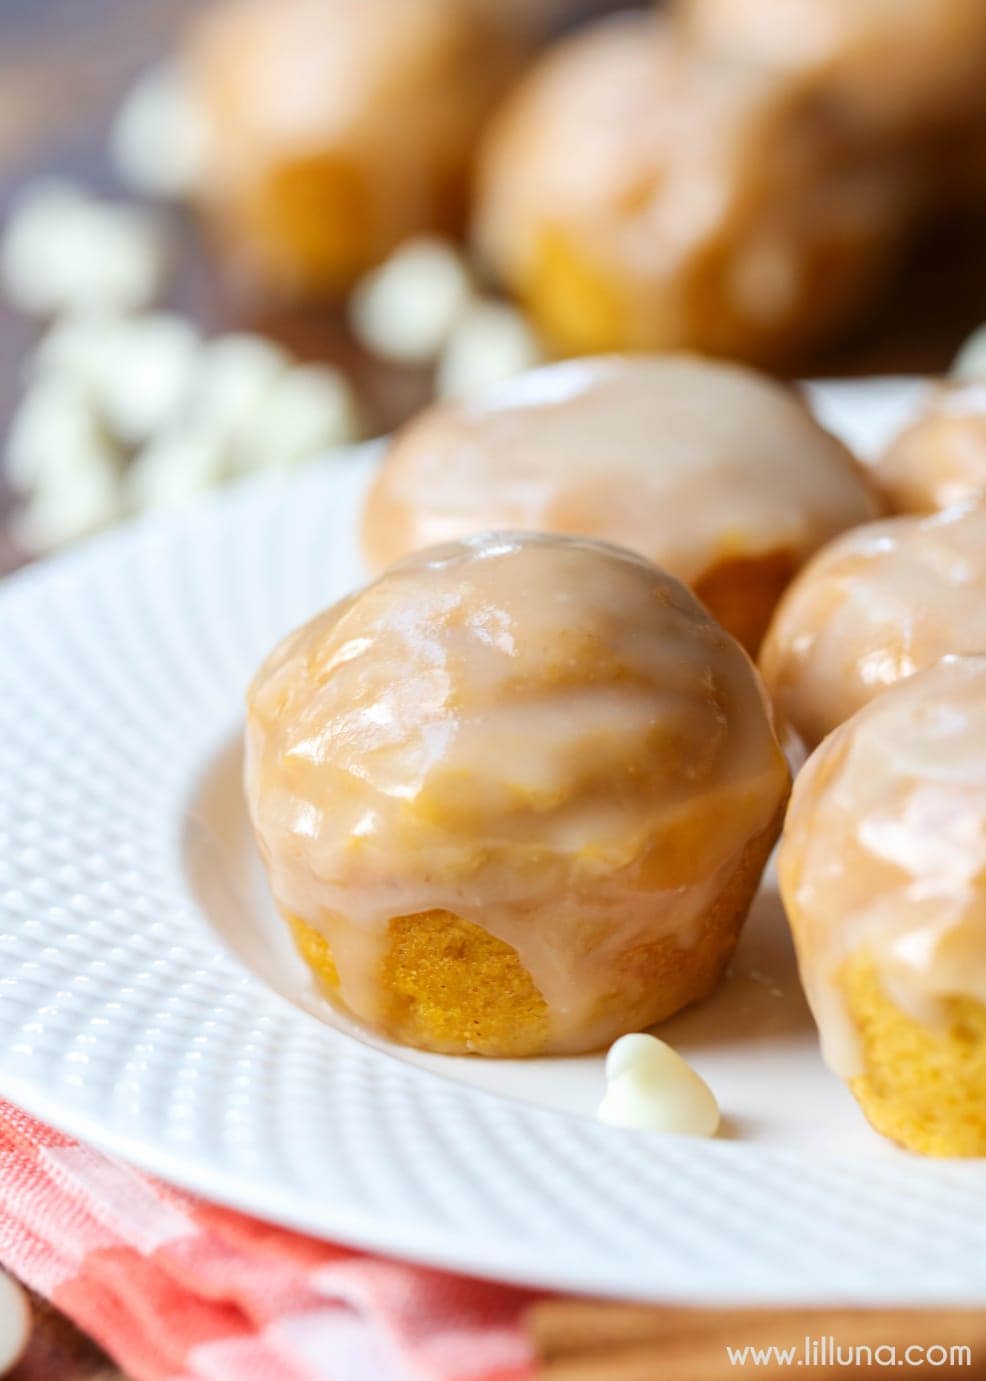 Thanksgiving desserts - mini glazed pumpkin donut muffins piled on a white plate.